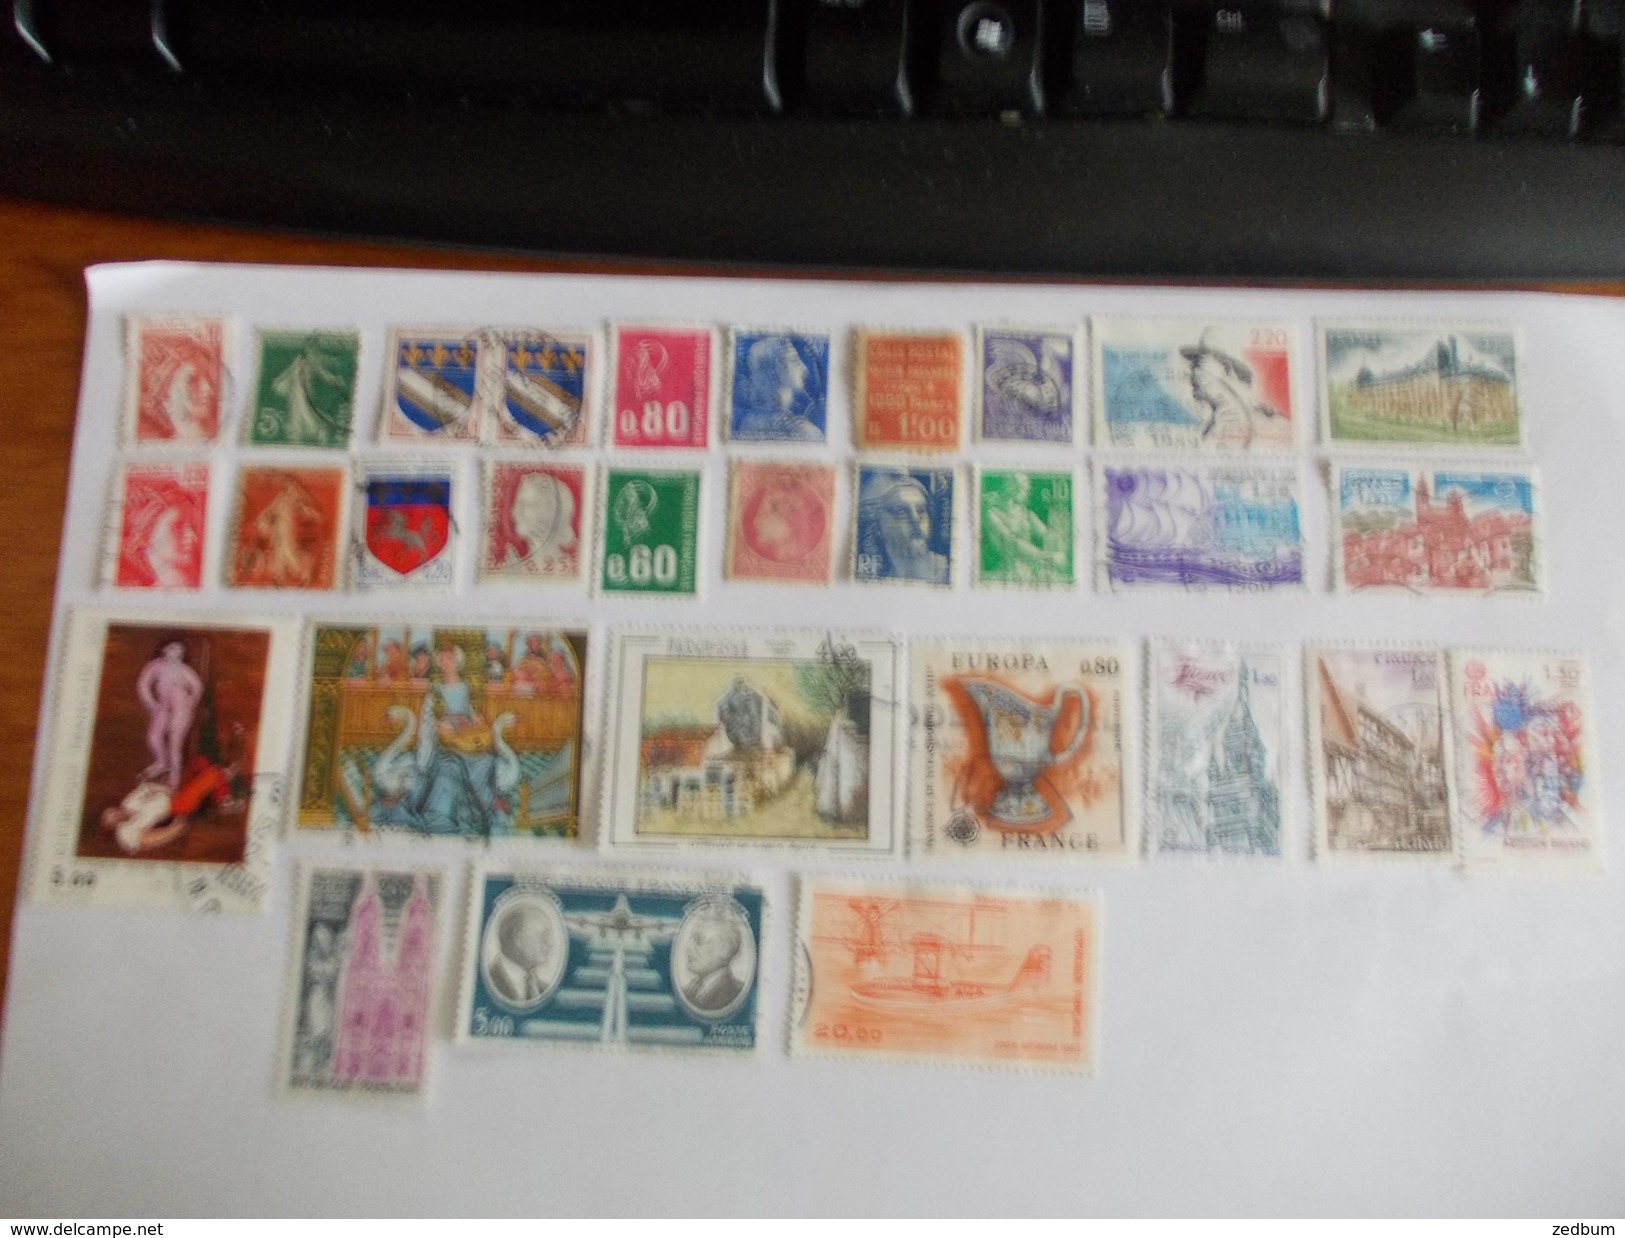 TIMBRE France Lot De 30 Timbres à Identifier N° 566 - Lots & Kiloware (mixtures) - Max. 999 Stamps